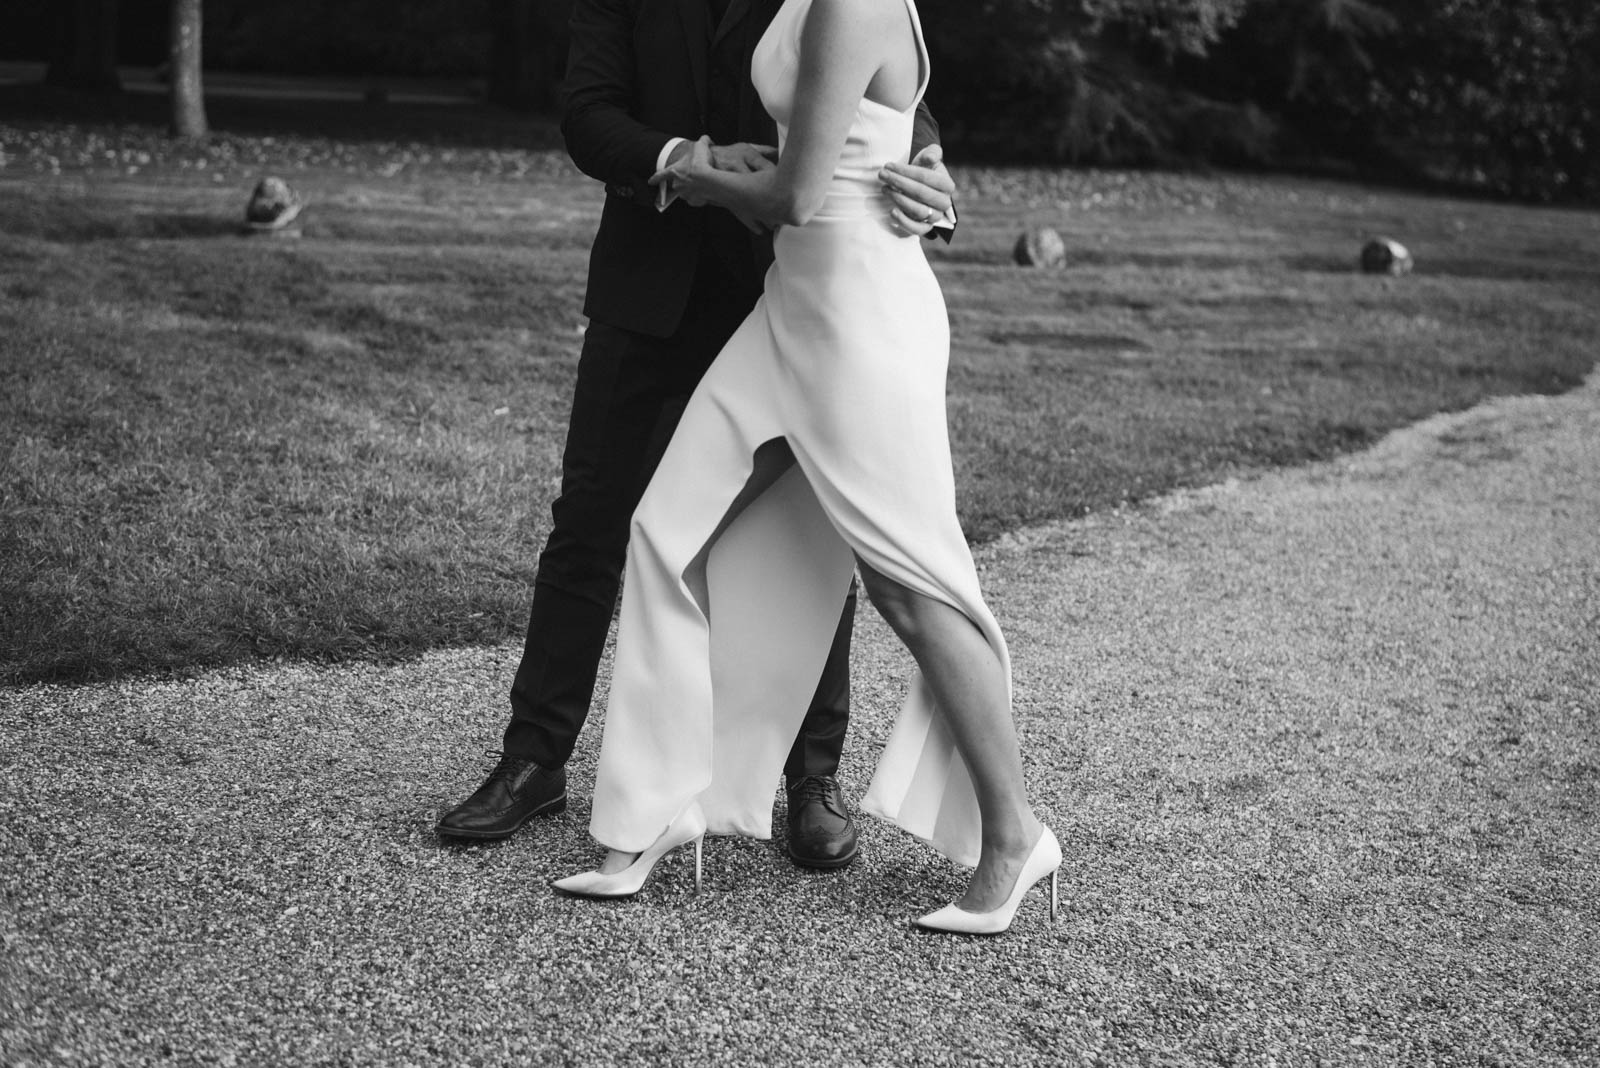 romantic black and white wedding photo